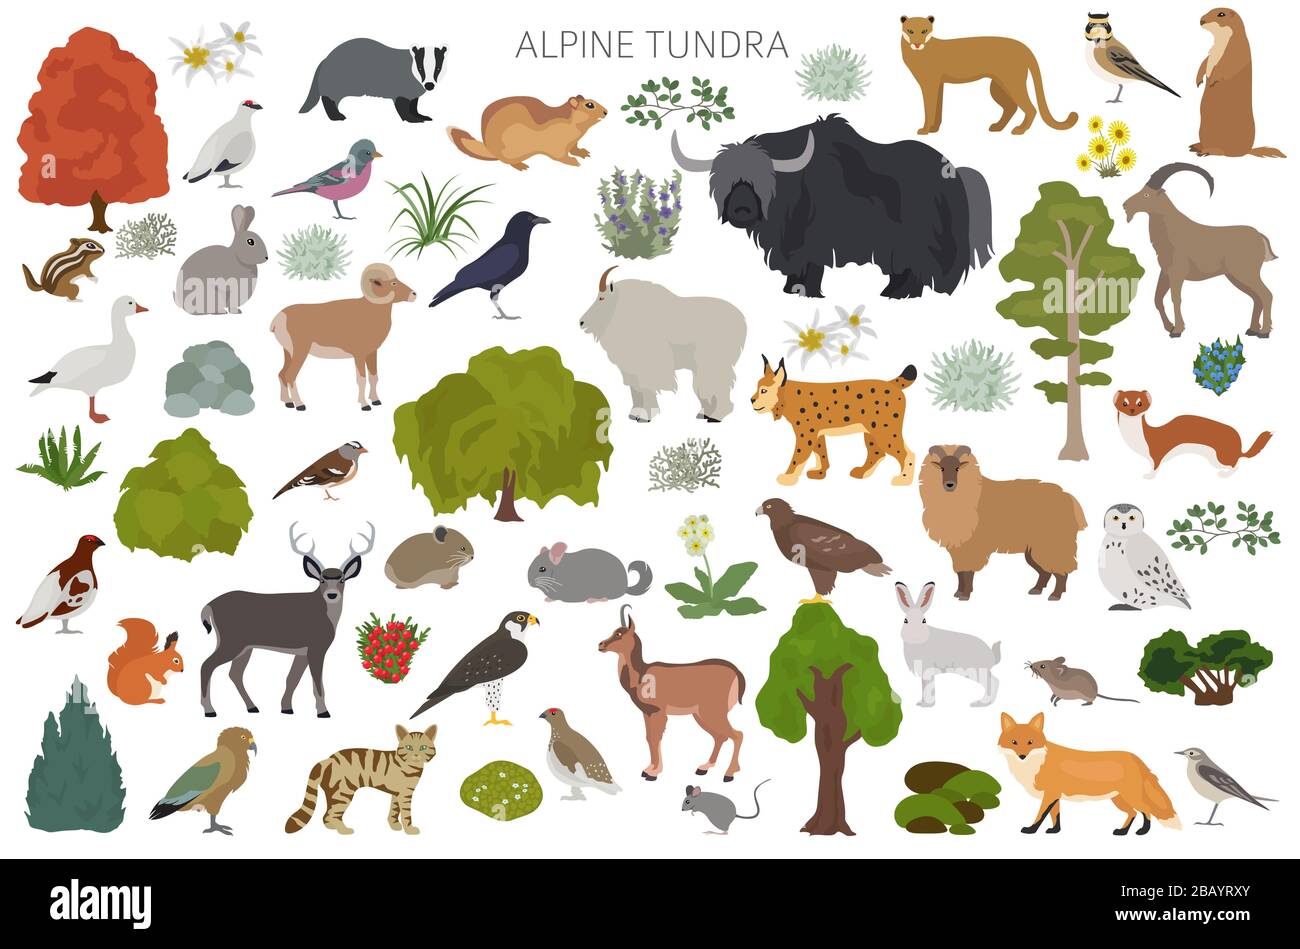 Apine tundra biome, natural region infographic. Terrestrial ecosystem world map. Animals, birds and plants design set. Vector illustration Stock Vector